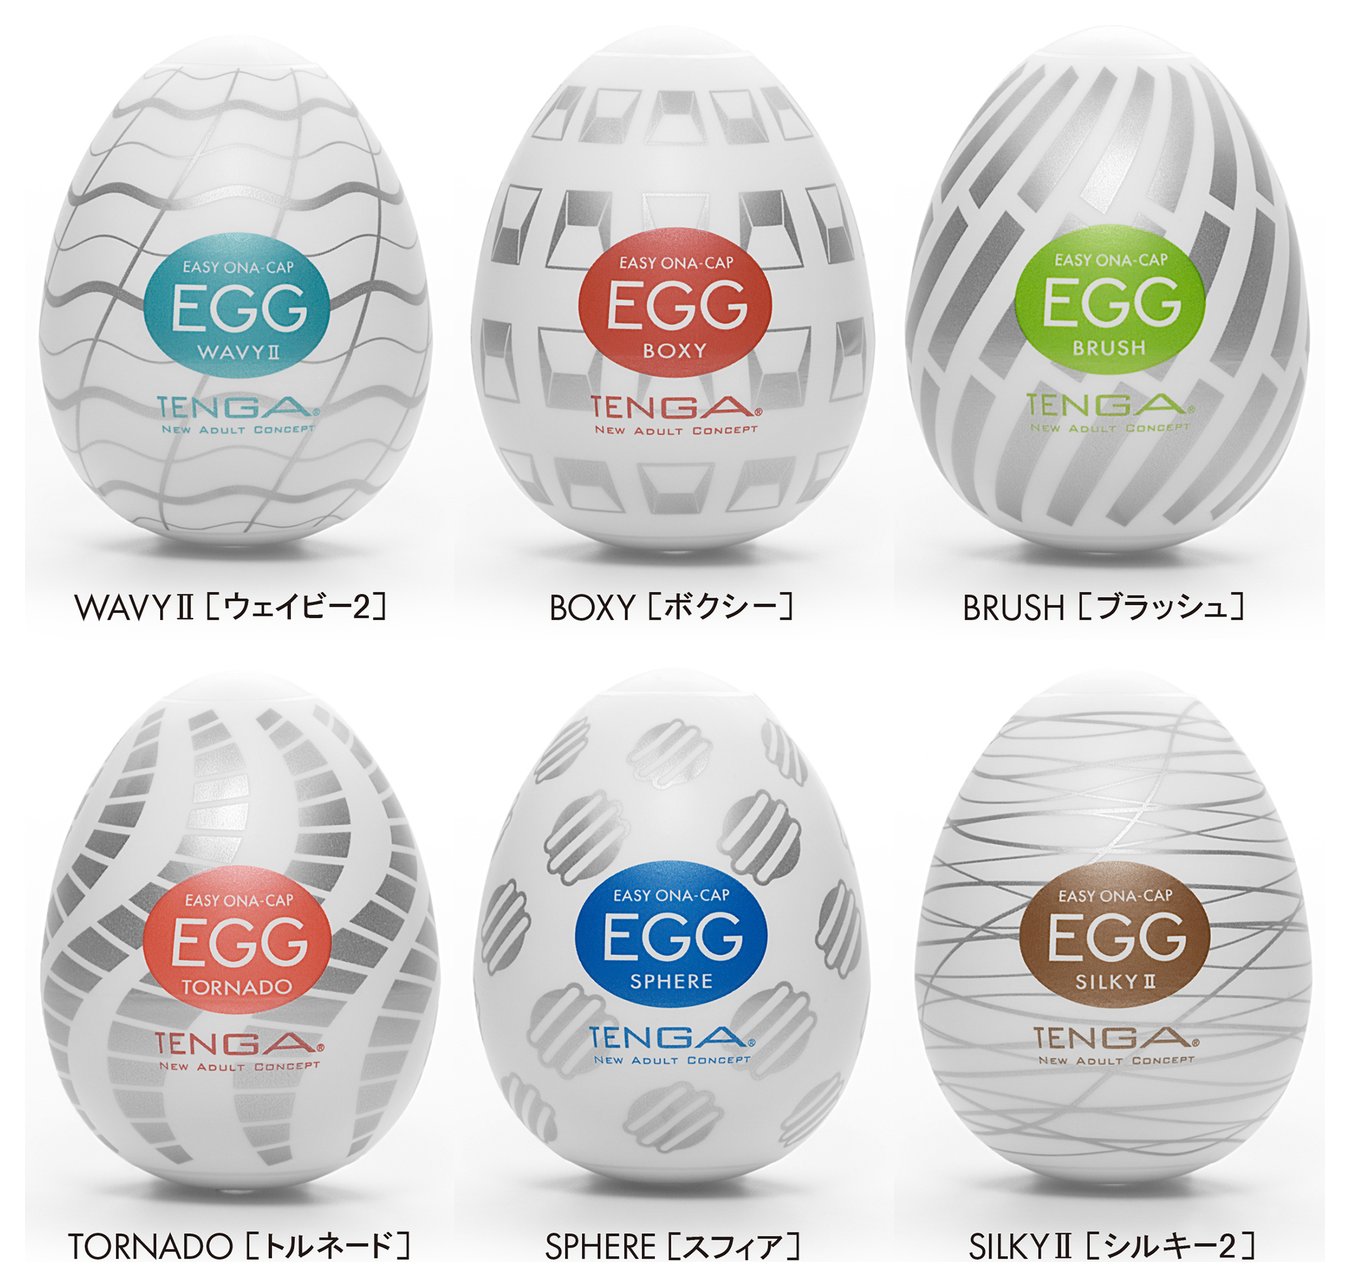 Мастурбатор tenga. Tenga набор Egg - III стимуляторов, 6 шт. Tenga набор стимуляторов tenga Egg - III. Tenga мастурбатор-яйцо variety Pack Egg (Egg-vp6. Easy Beat Egg tenga набор.